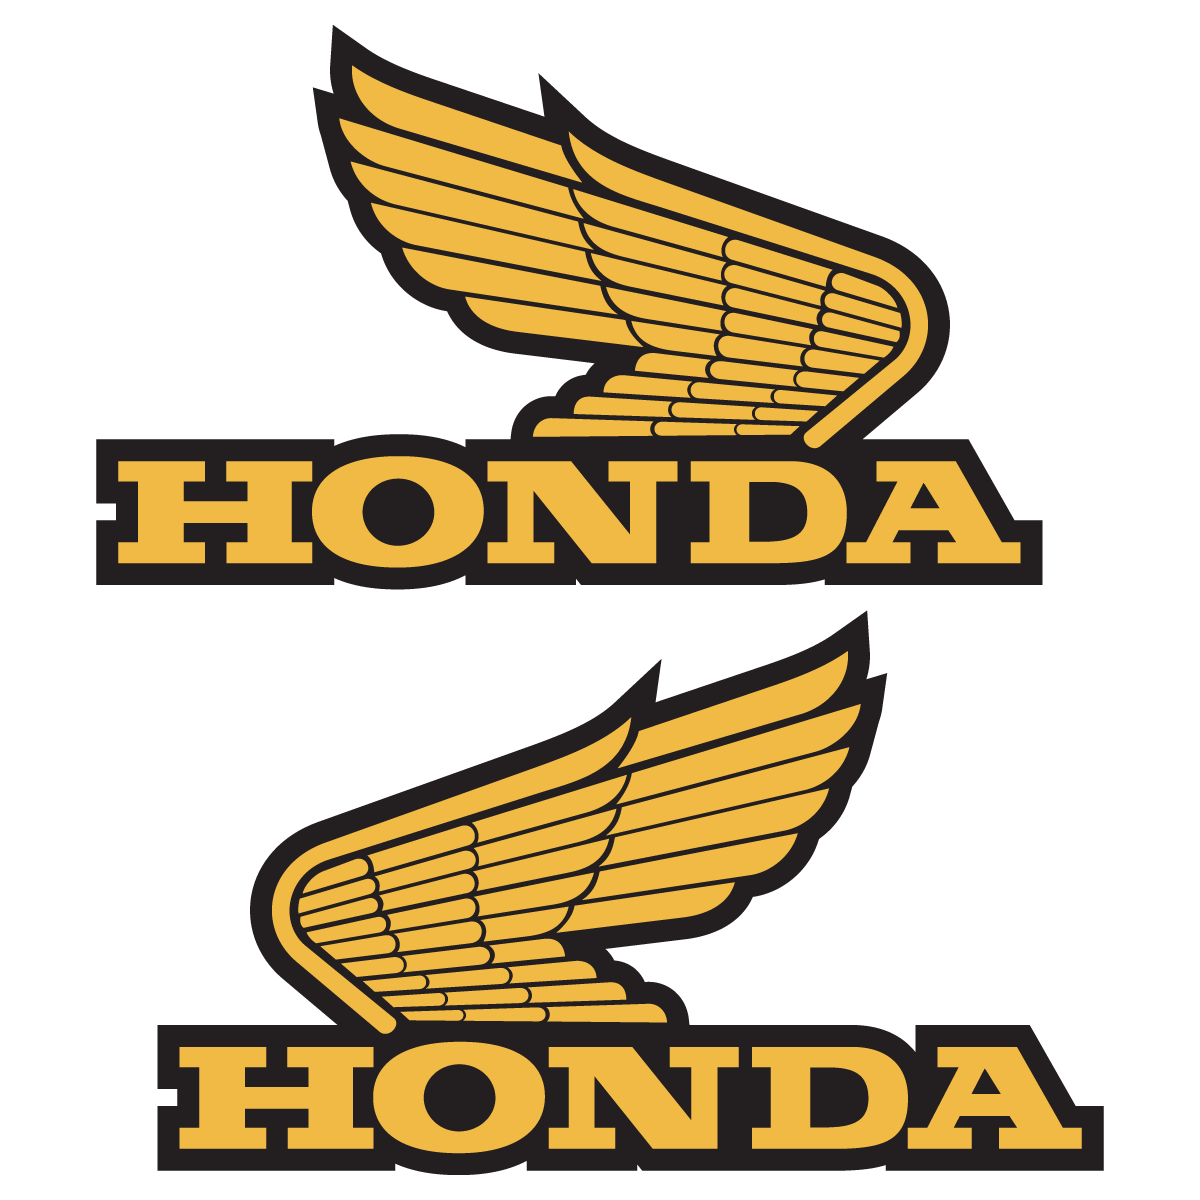 Honda Goldwing Logo - Honda Gold Wing Logo Decal Sticker Vector. Free Vector Silhouette